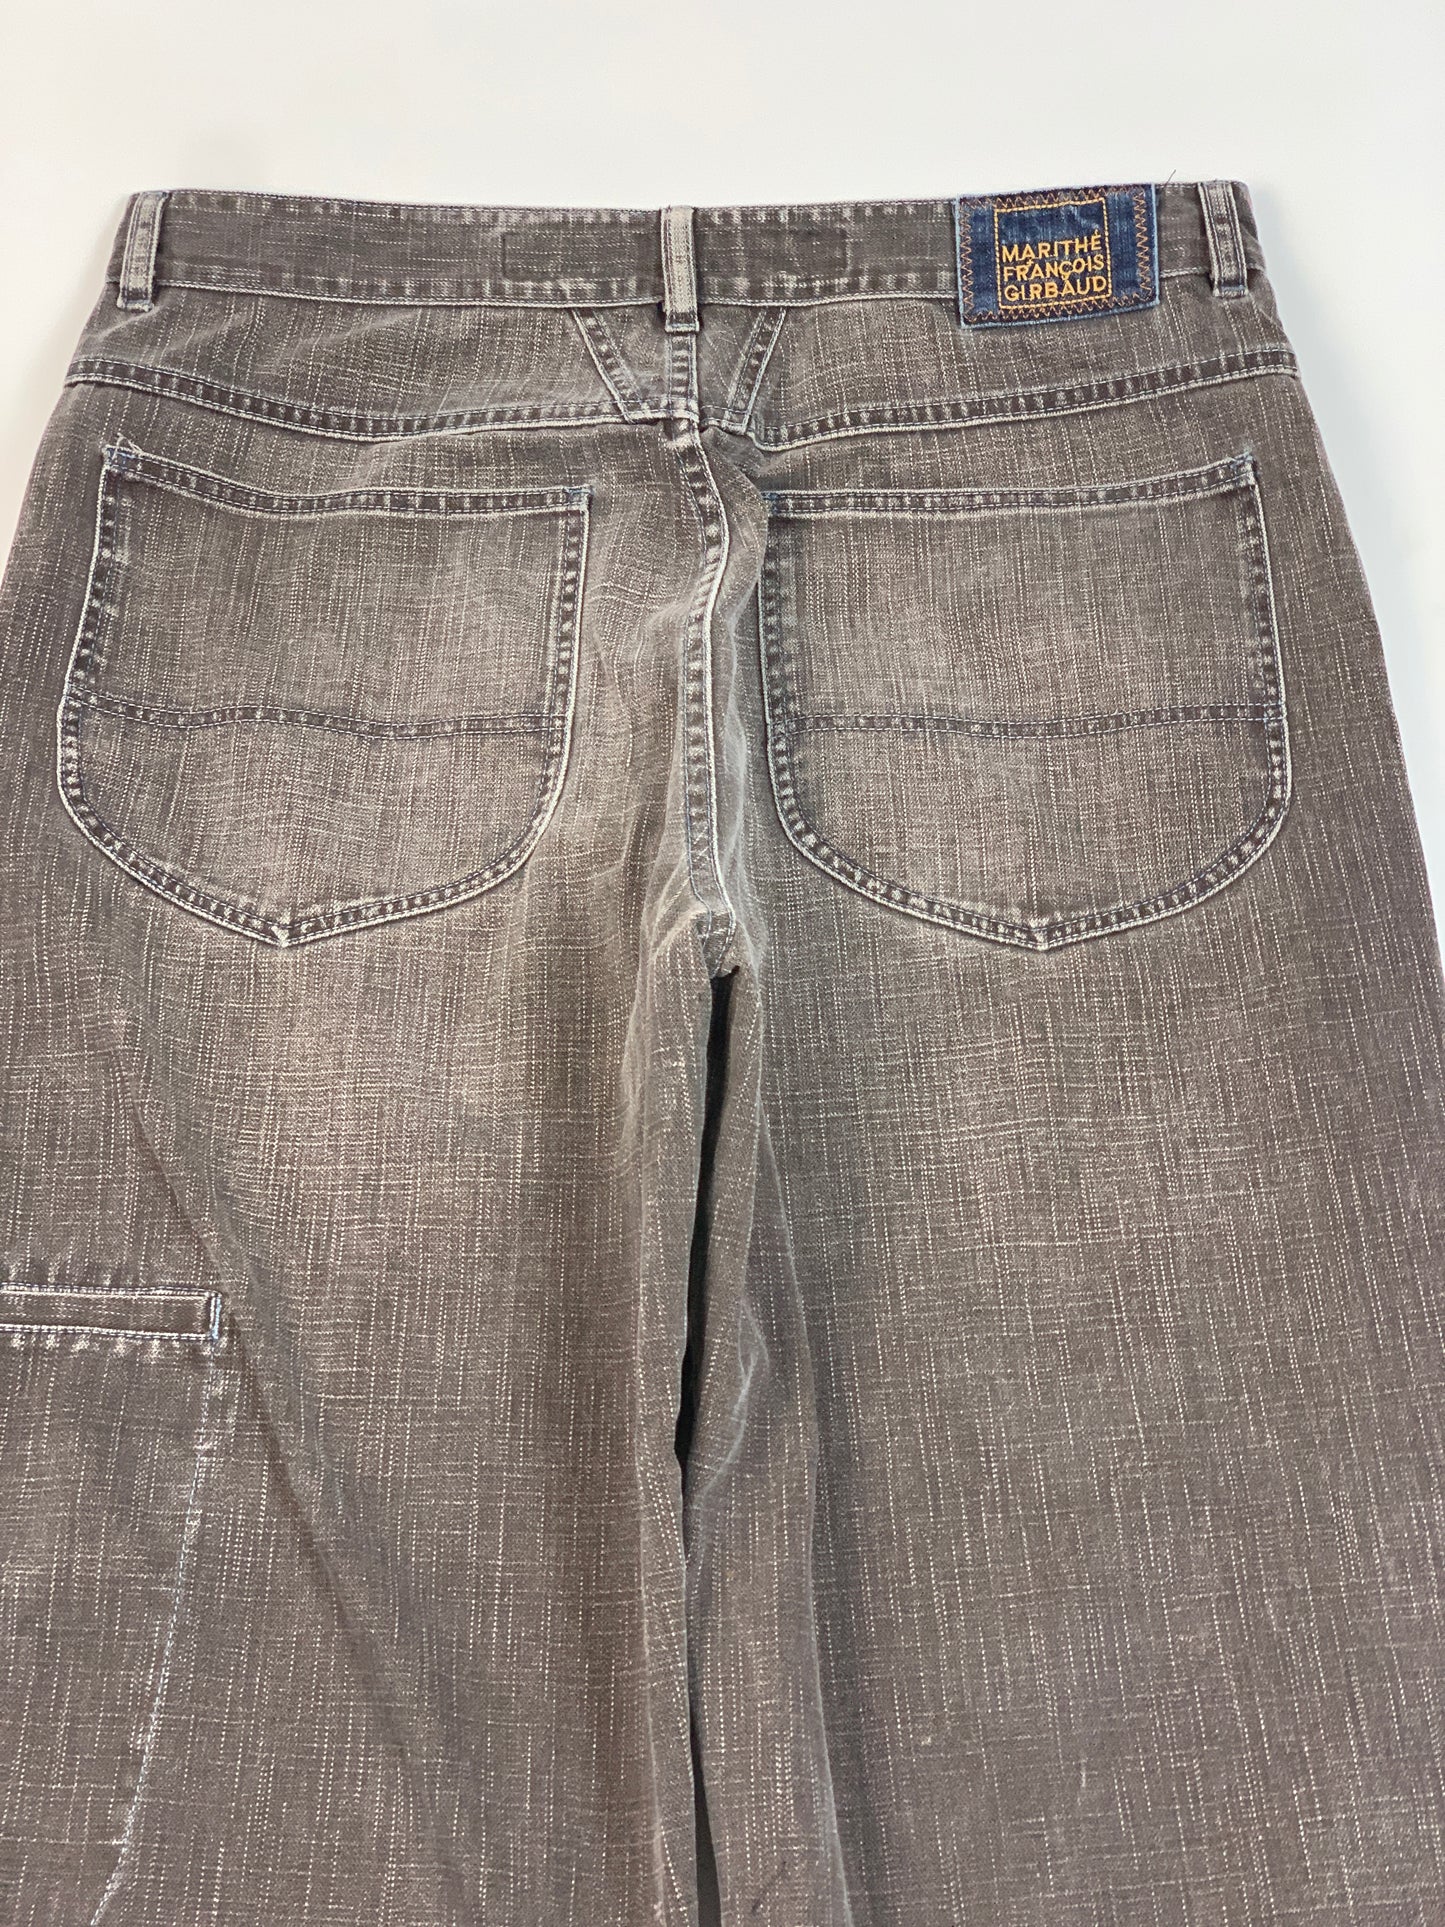 Marithe Francois Girbaud Vintage Jeans - 36